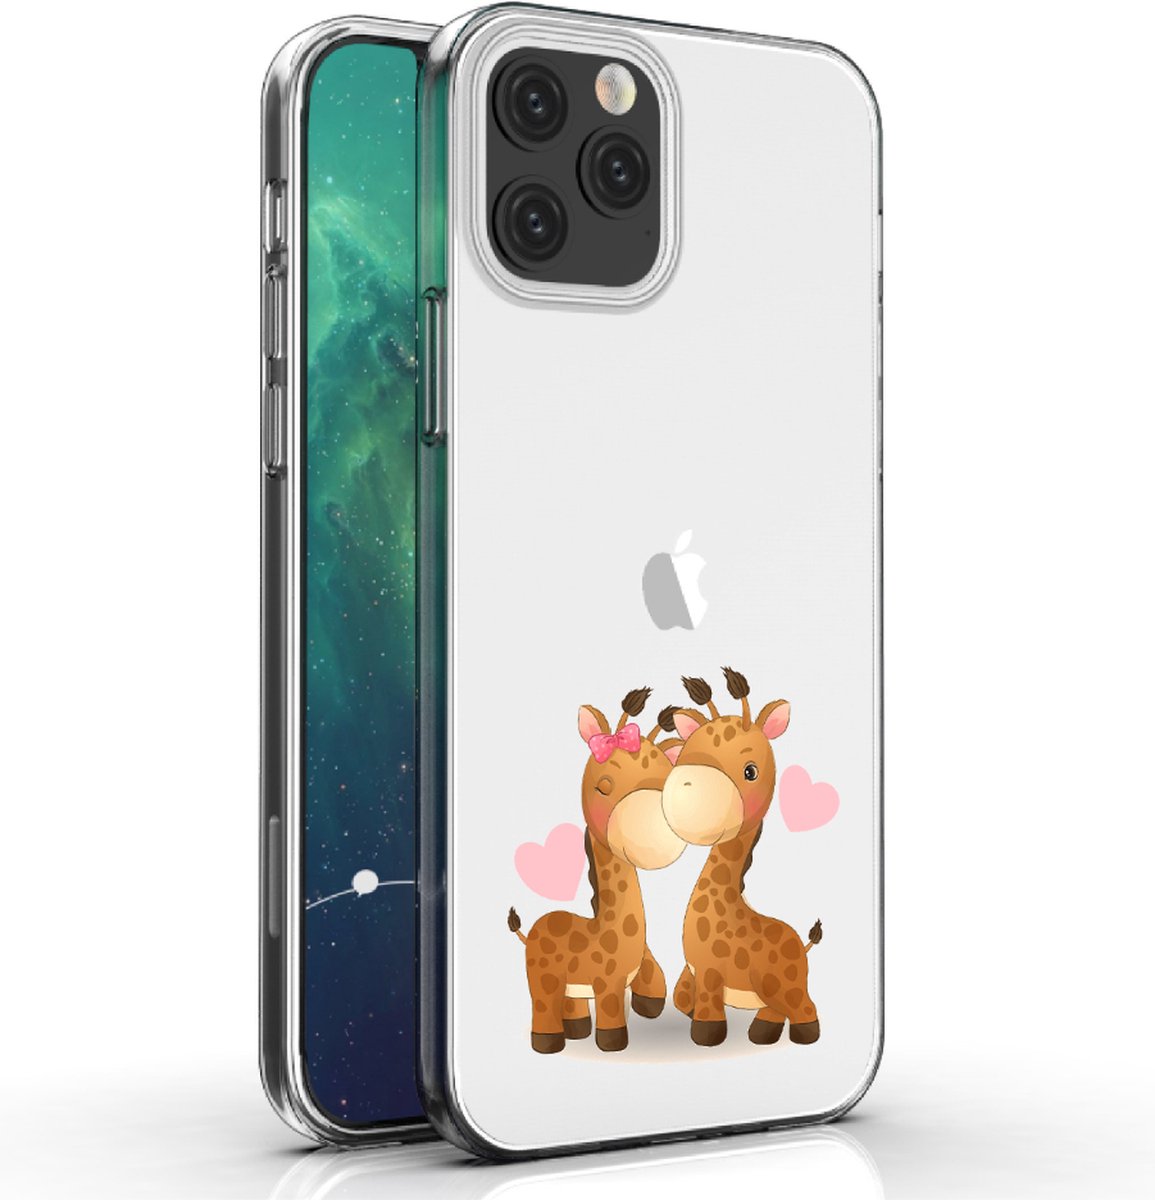 Apple Iphone 12 Pro Max telefoonhoesje transparant siliconen - Giraffen